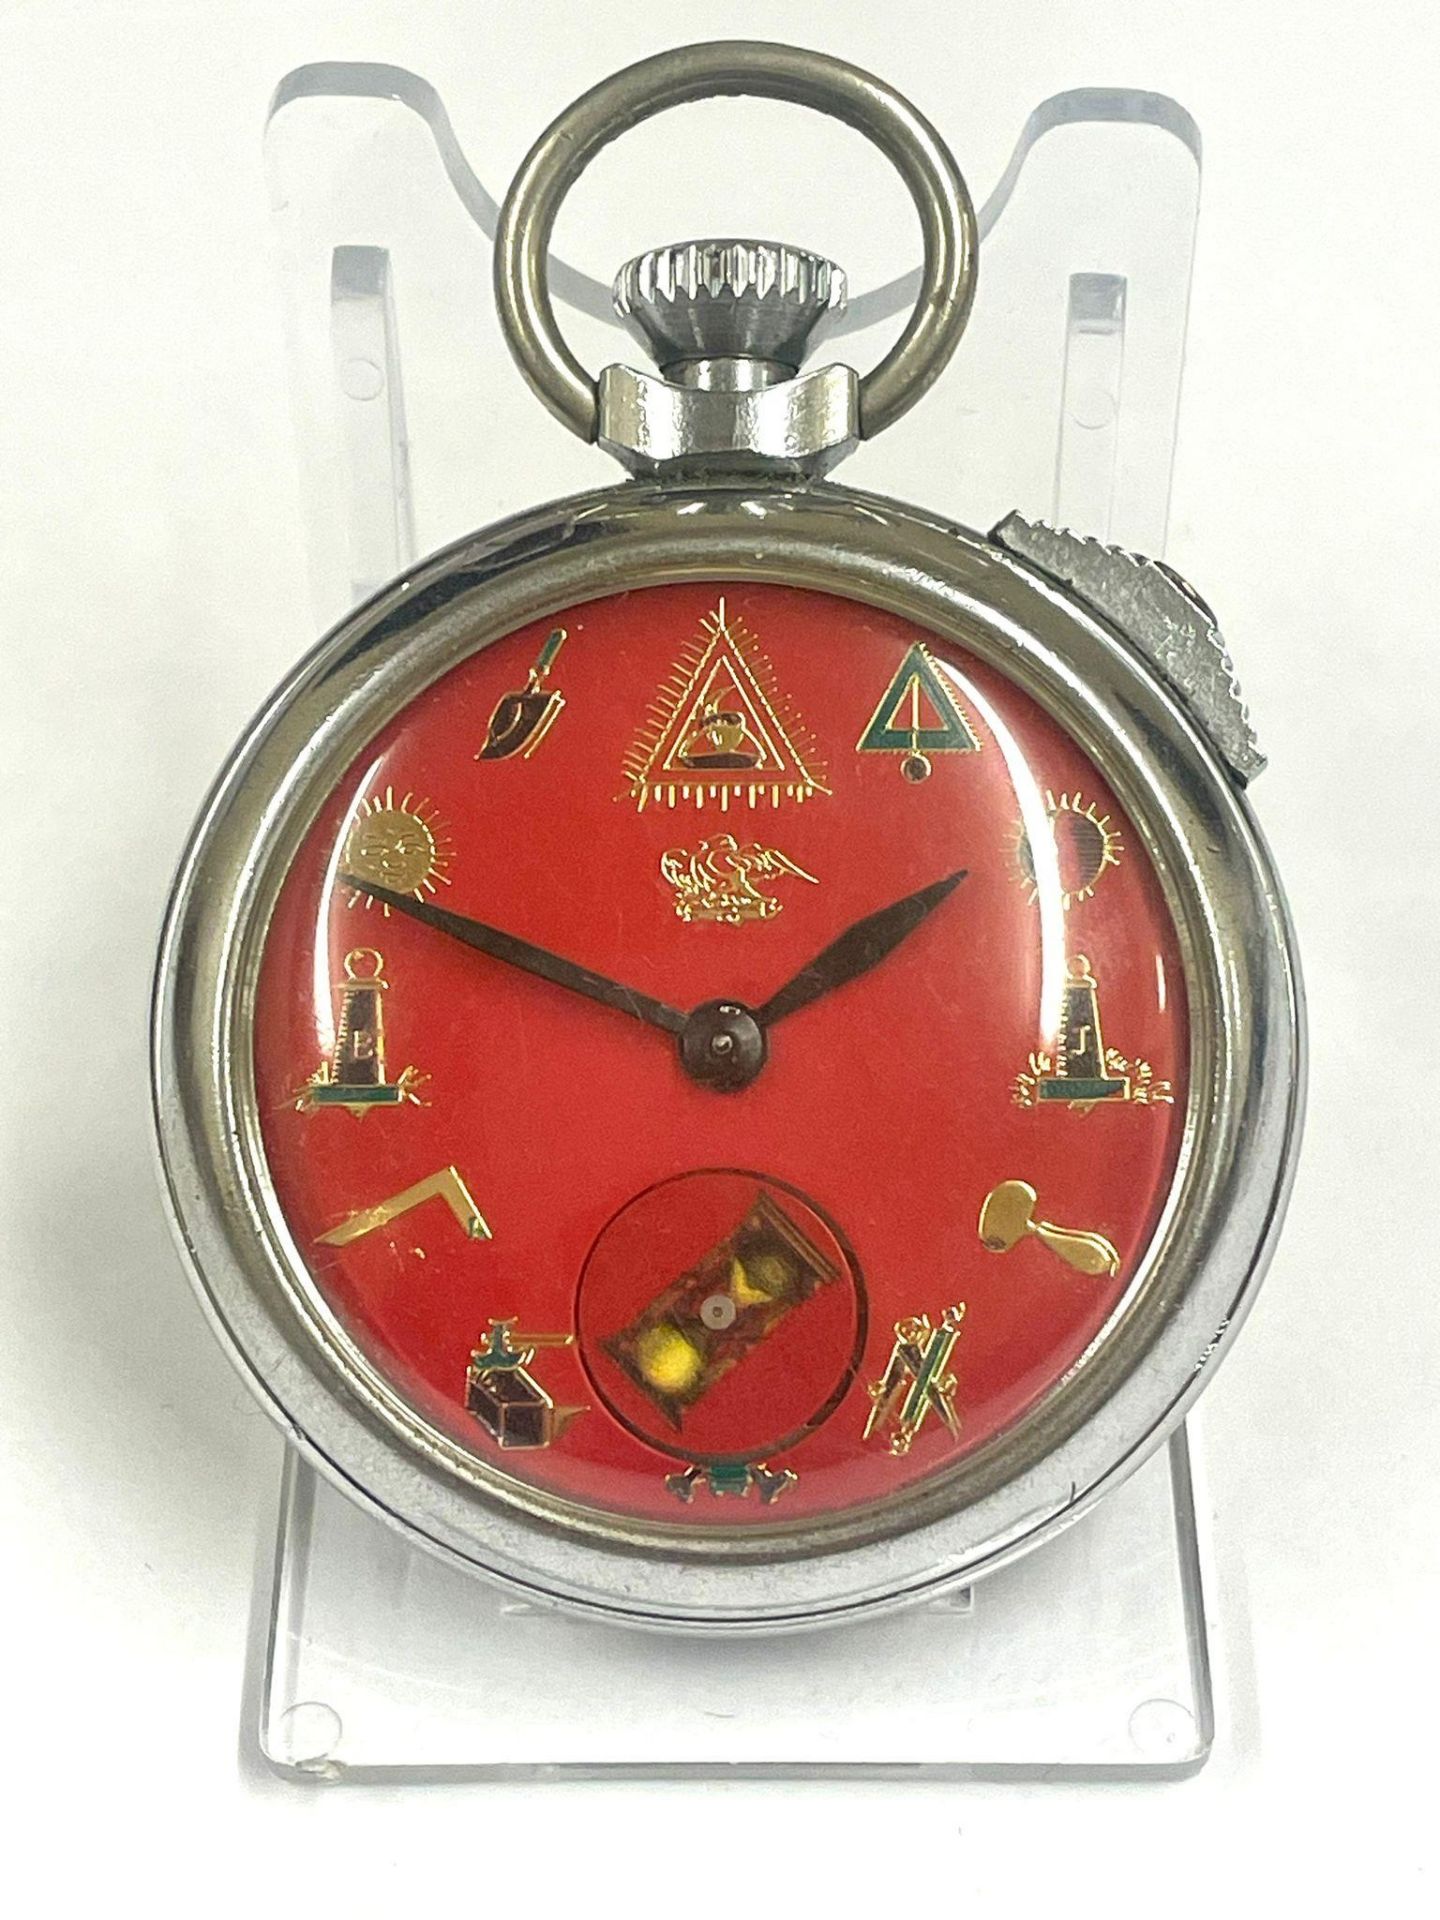 Vintage Masonic automaton ( rotating hourglass ) pocket watch working